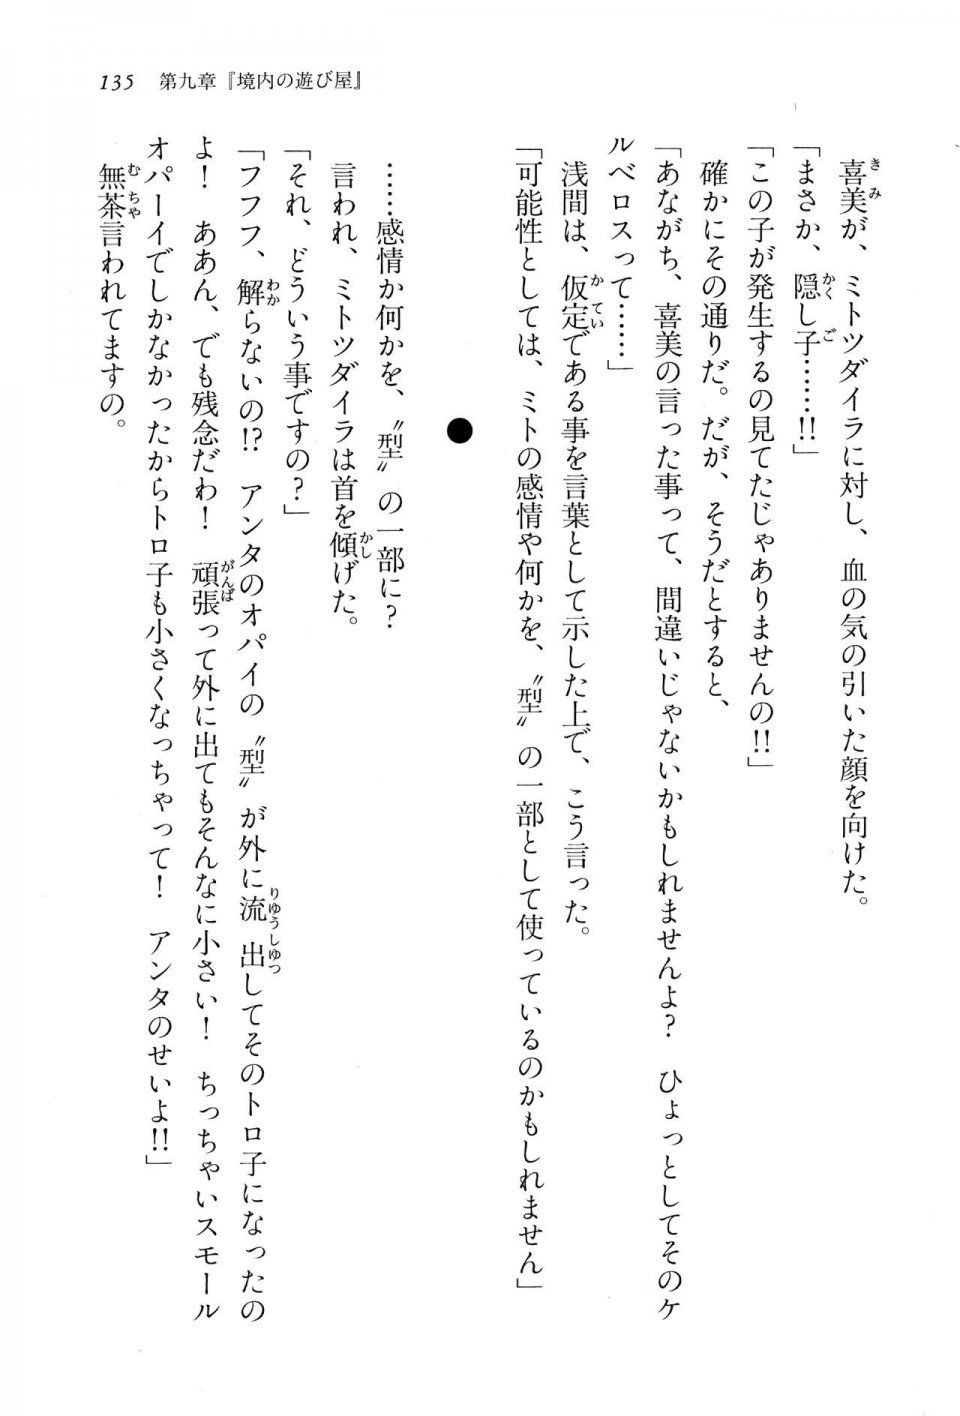 Kyoukai Senjou no Horizon BD Special Mininovel Vol 6(3B) - Photo #139